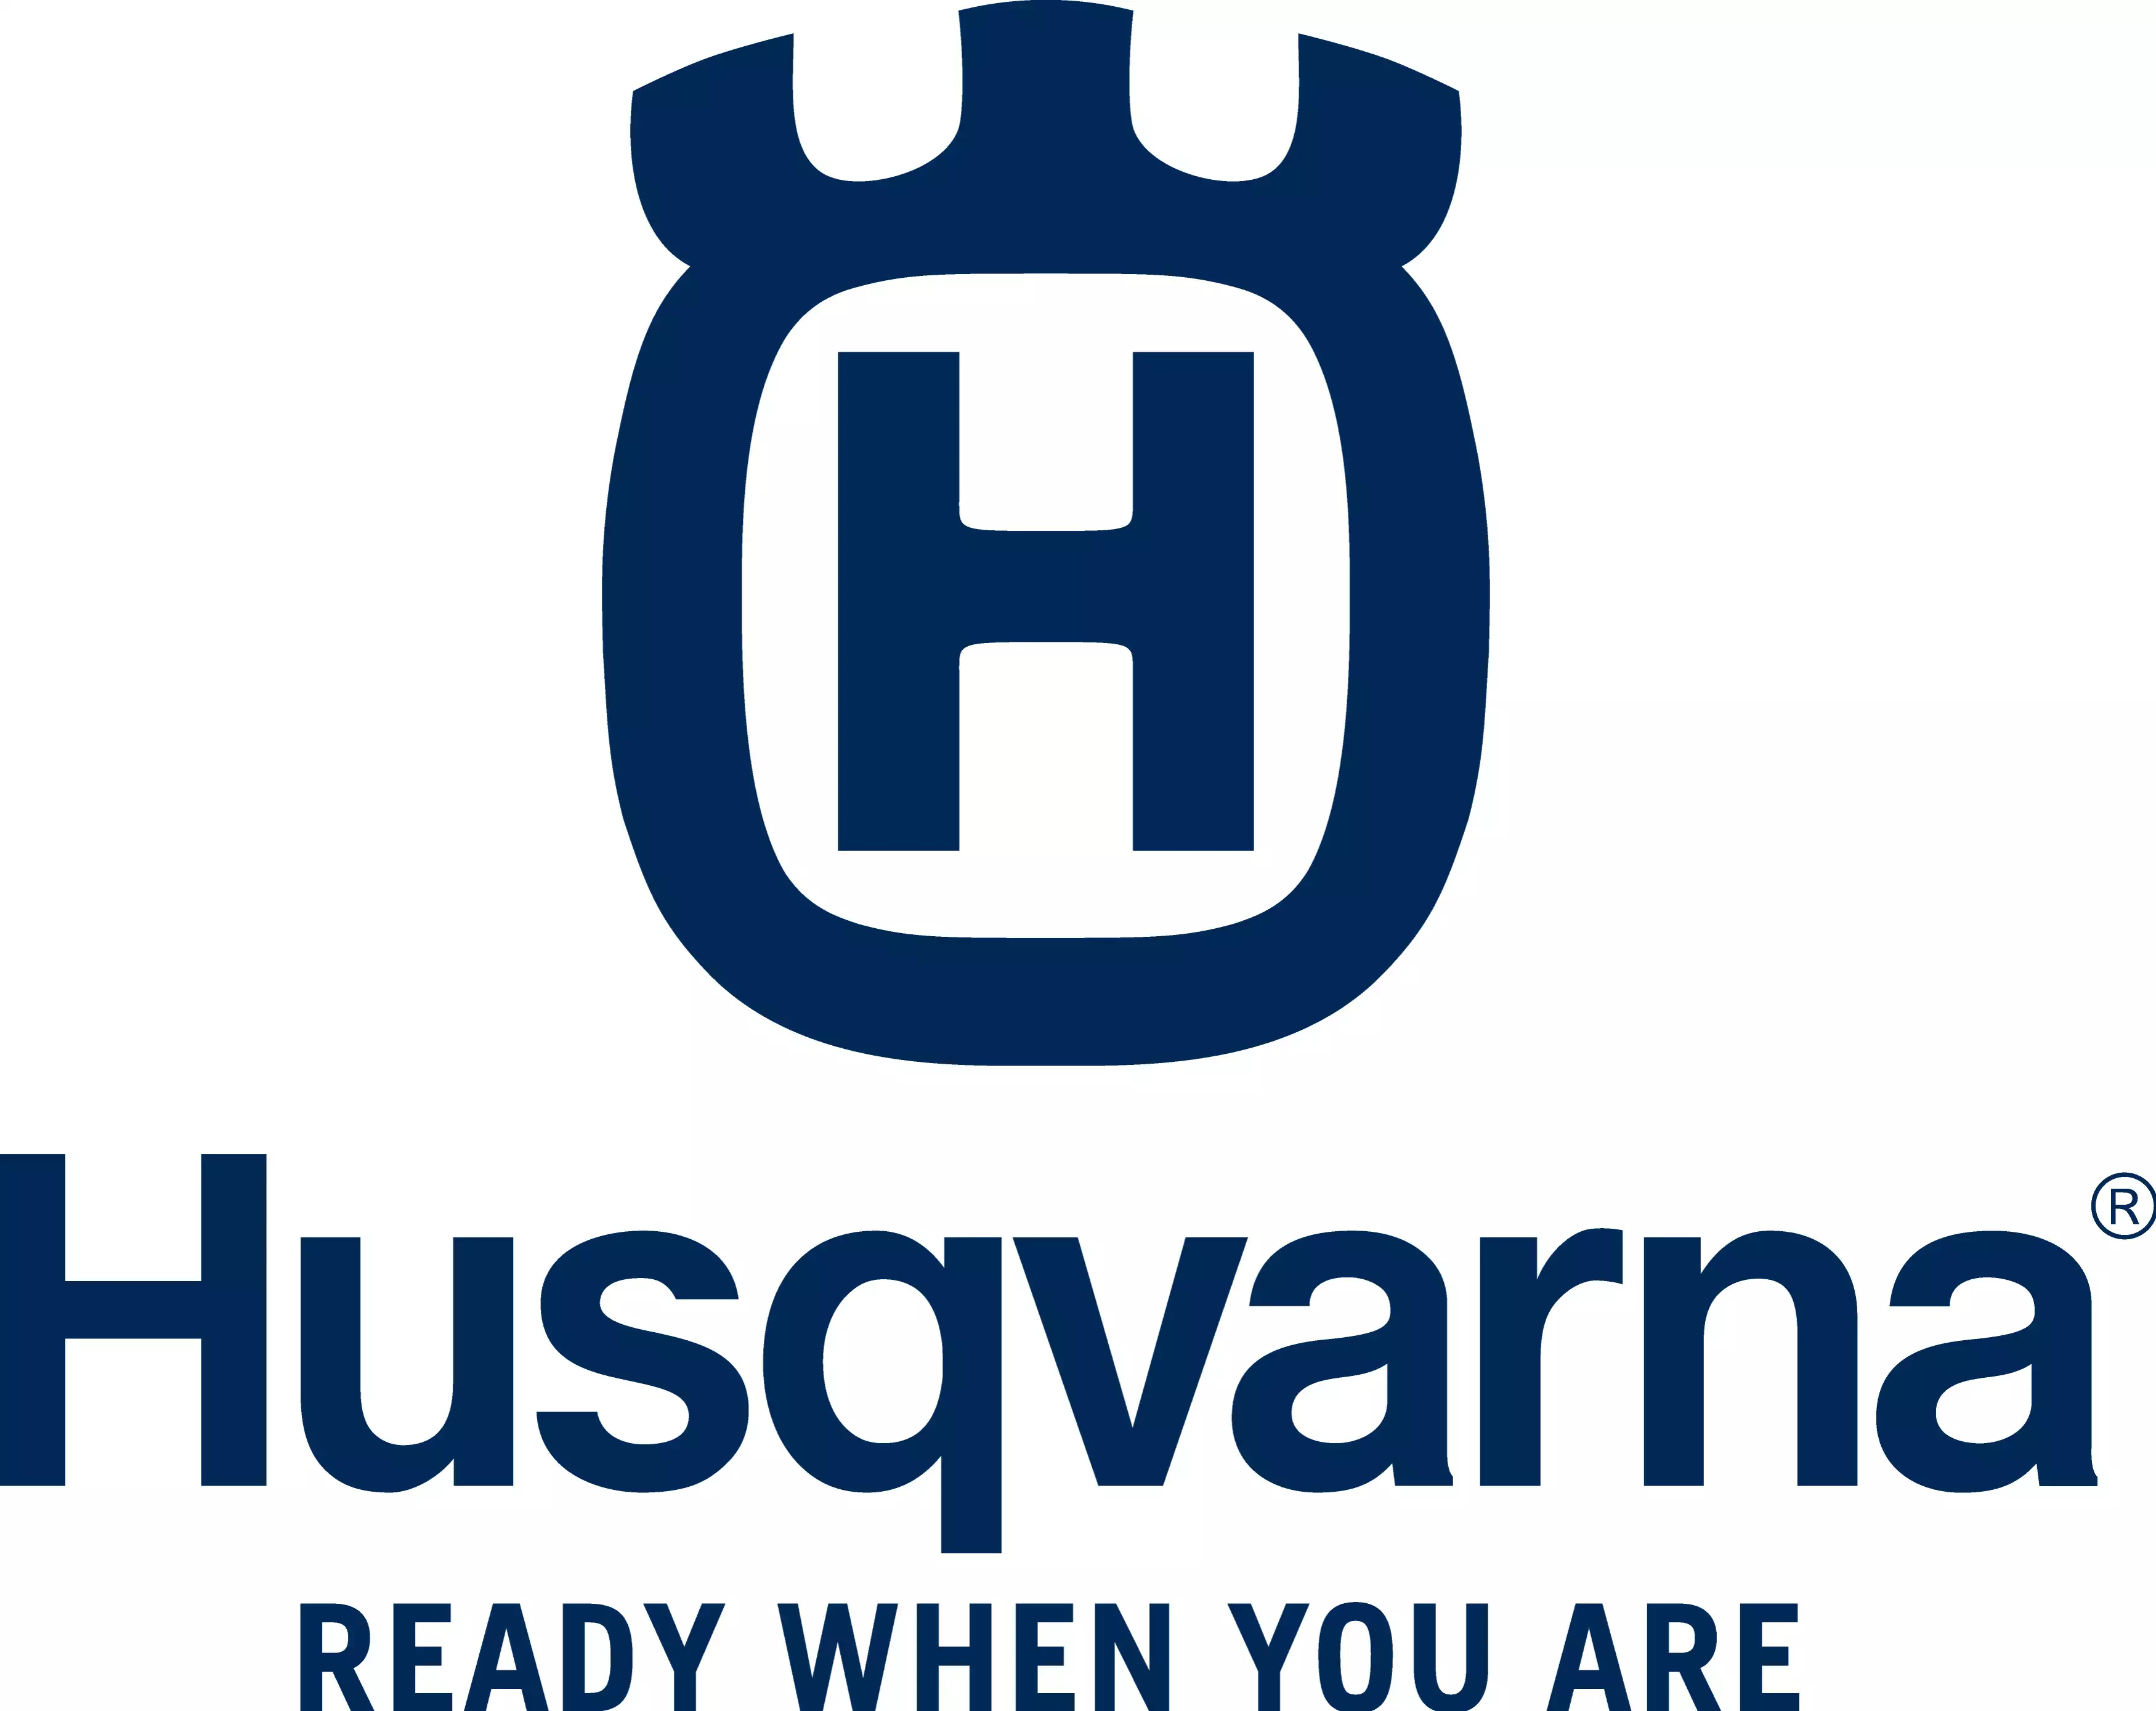 Logo de la marque Husqvarna